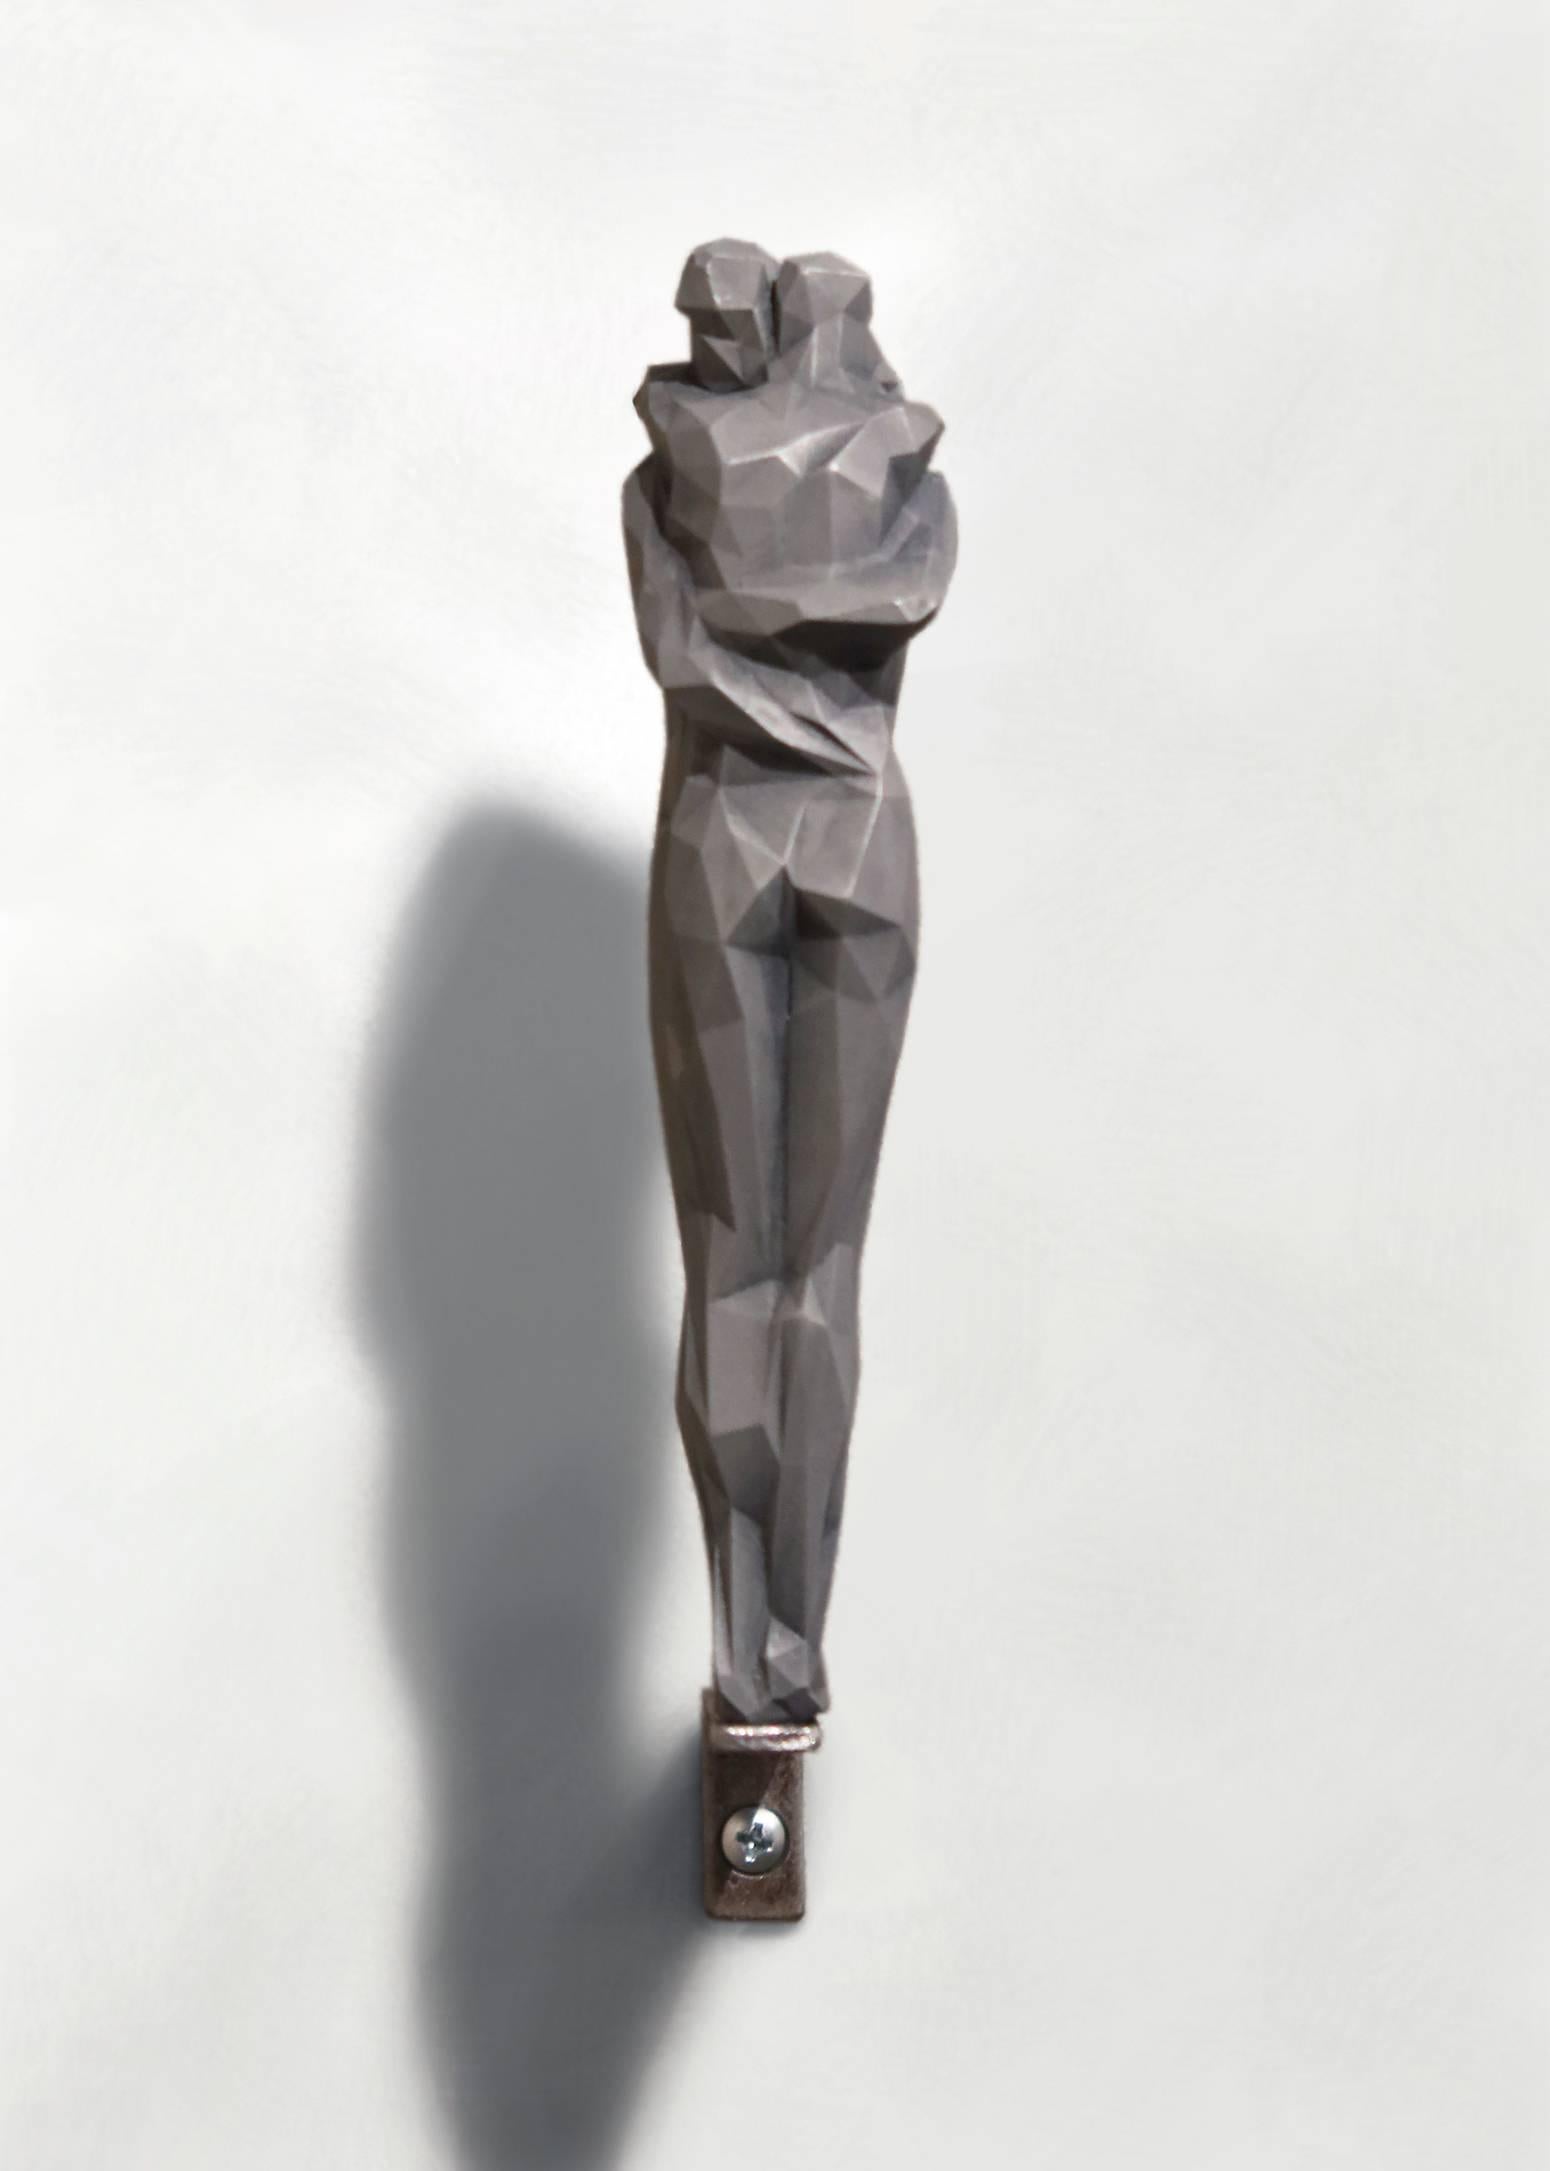 LOVE2014 - Sculpture by Emil Alzamora